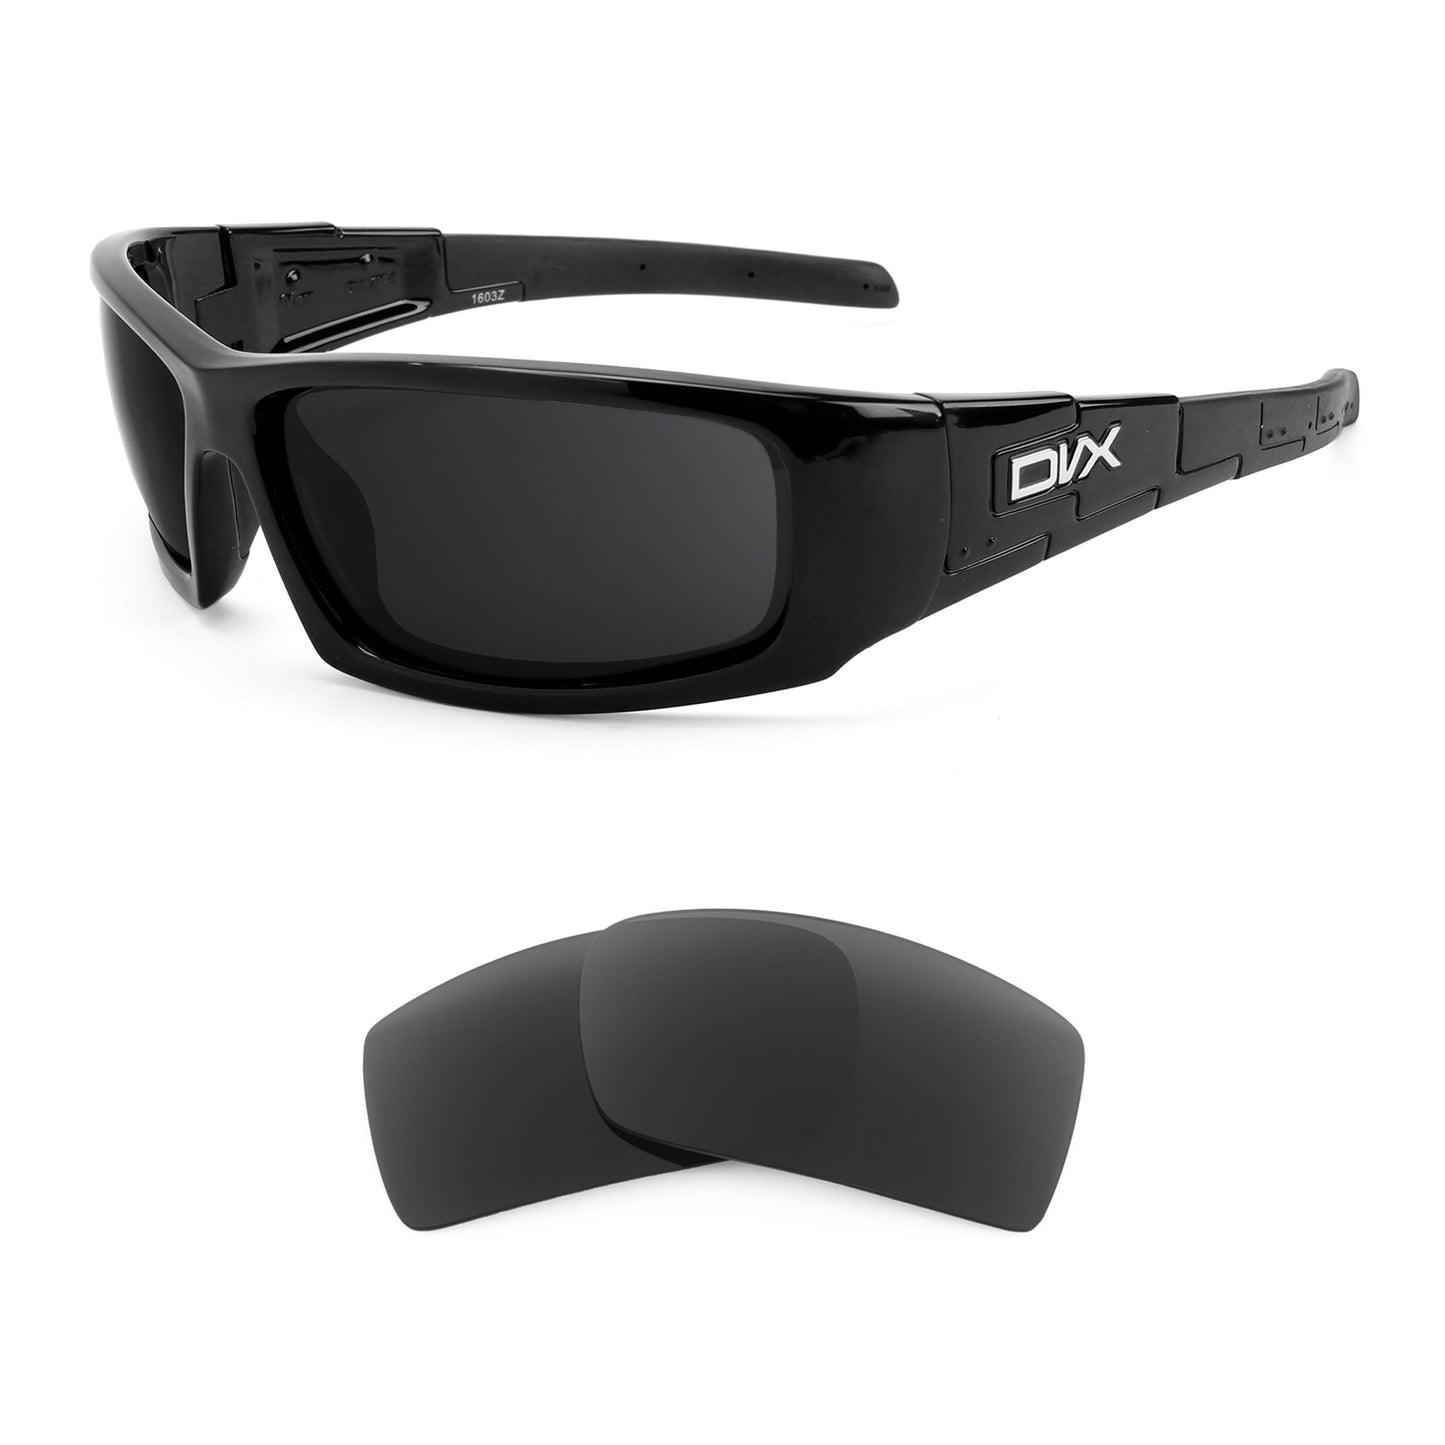 DVX Eyewear Vizor sunglasses with replacement lenses